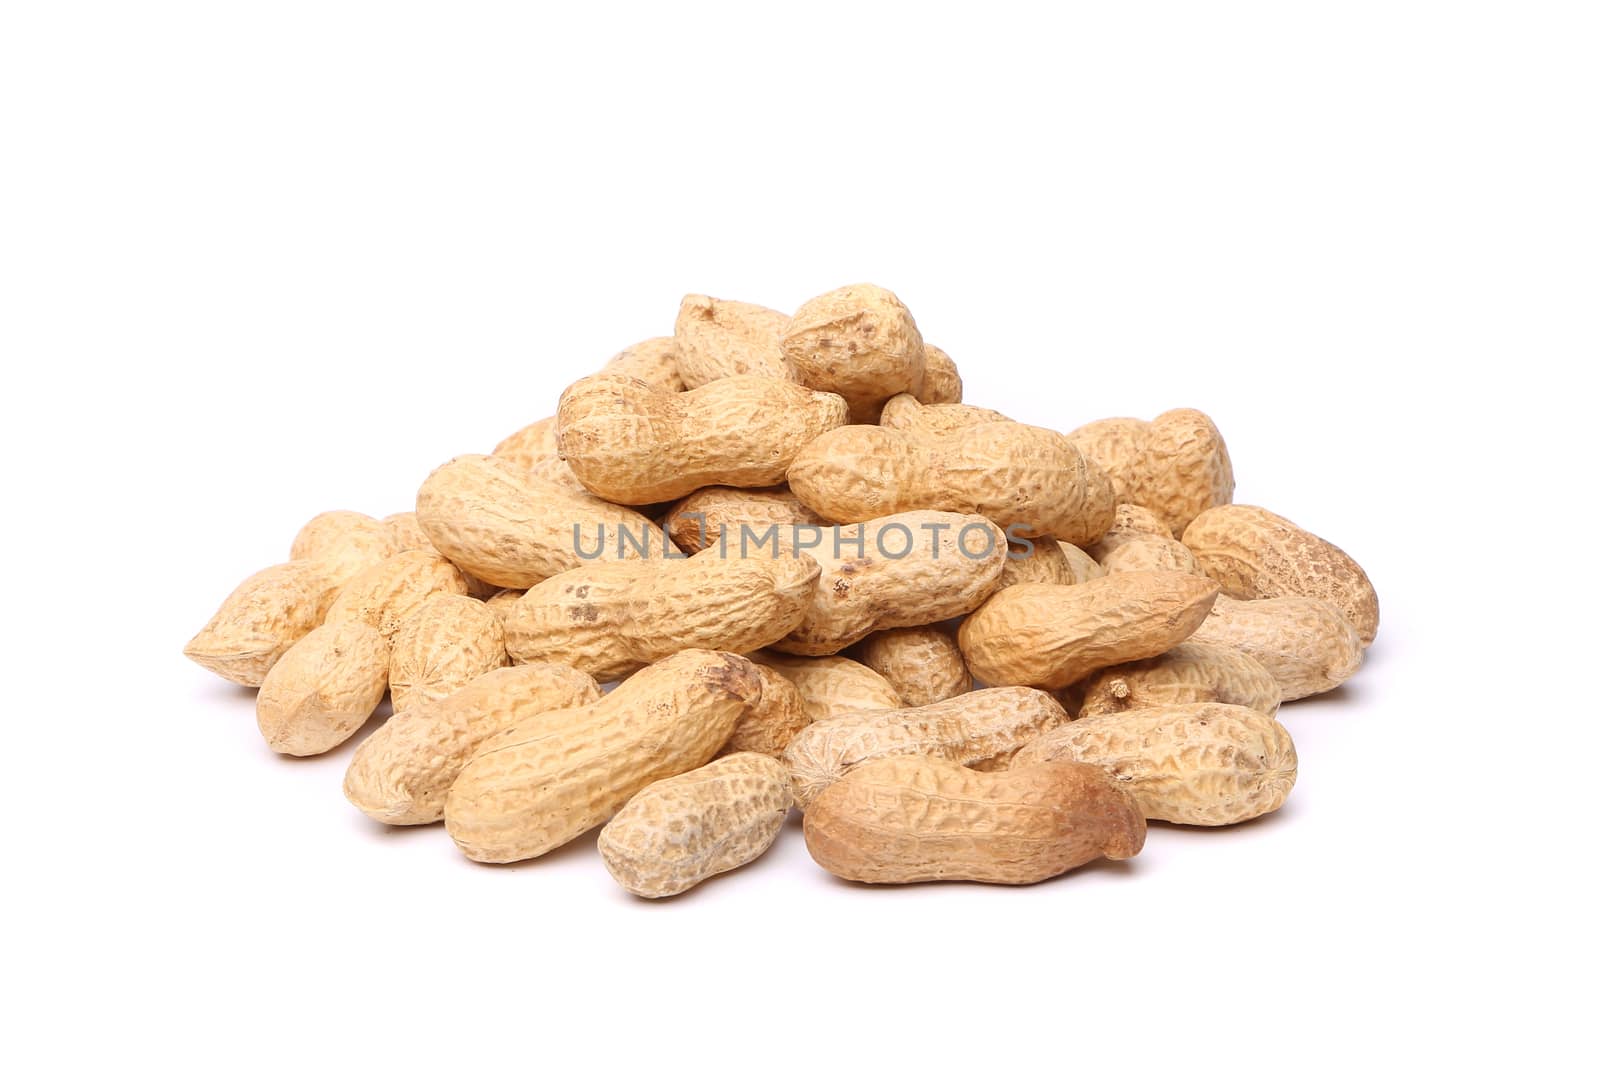 Dried peanuts in closeup by indigolotos